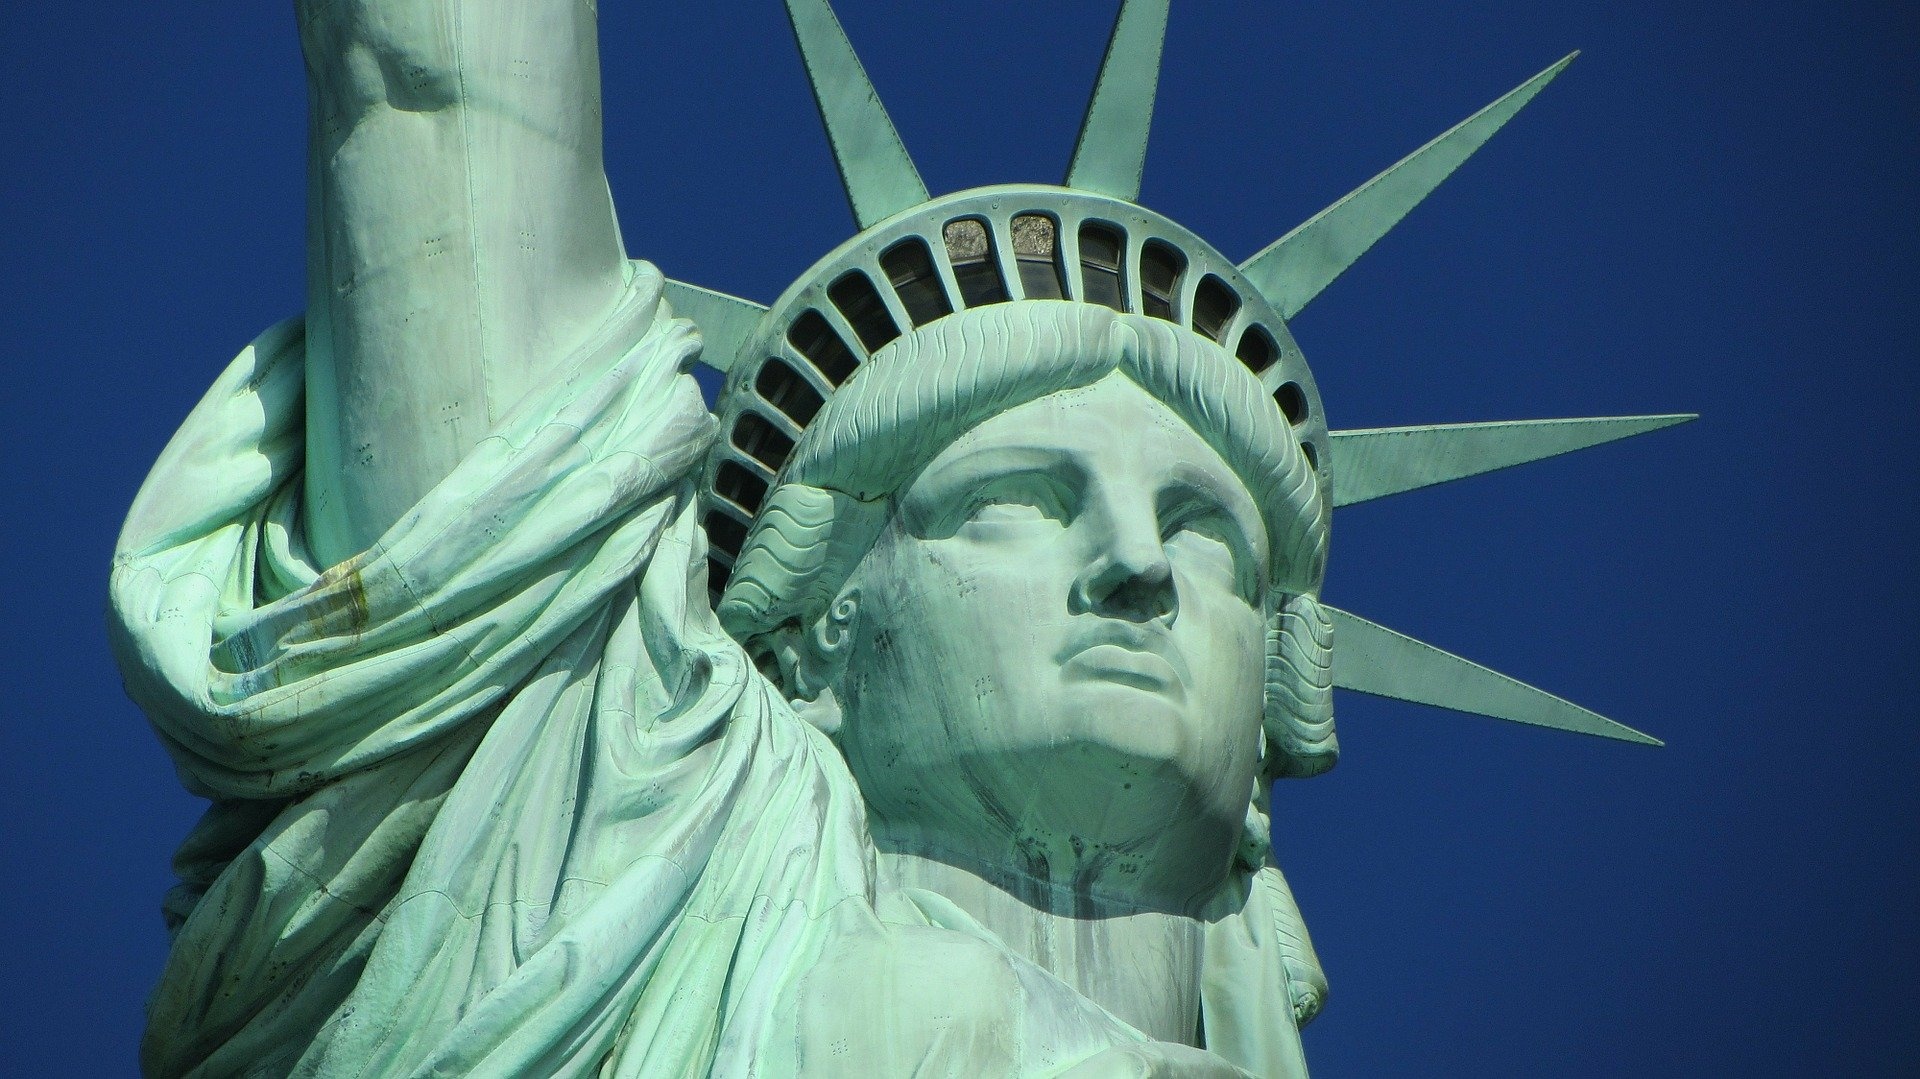 Statue of Liberty, New York, YSG Solar